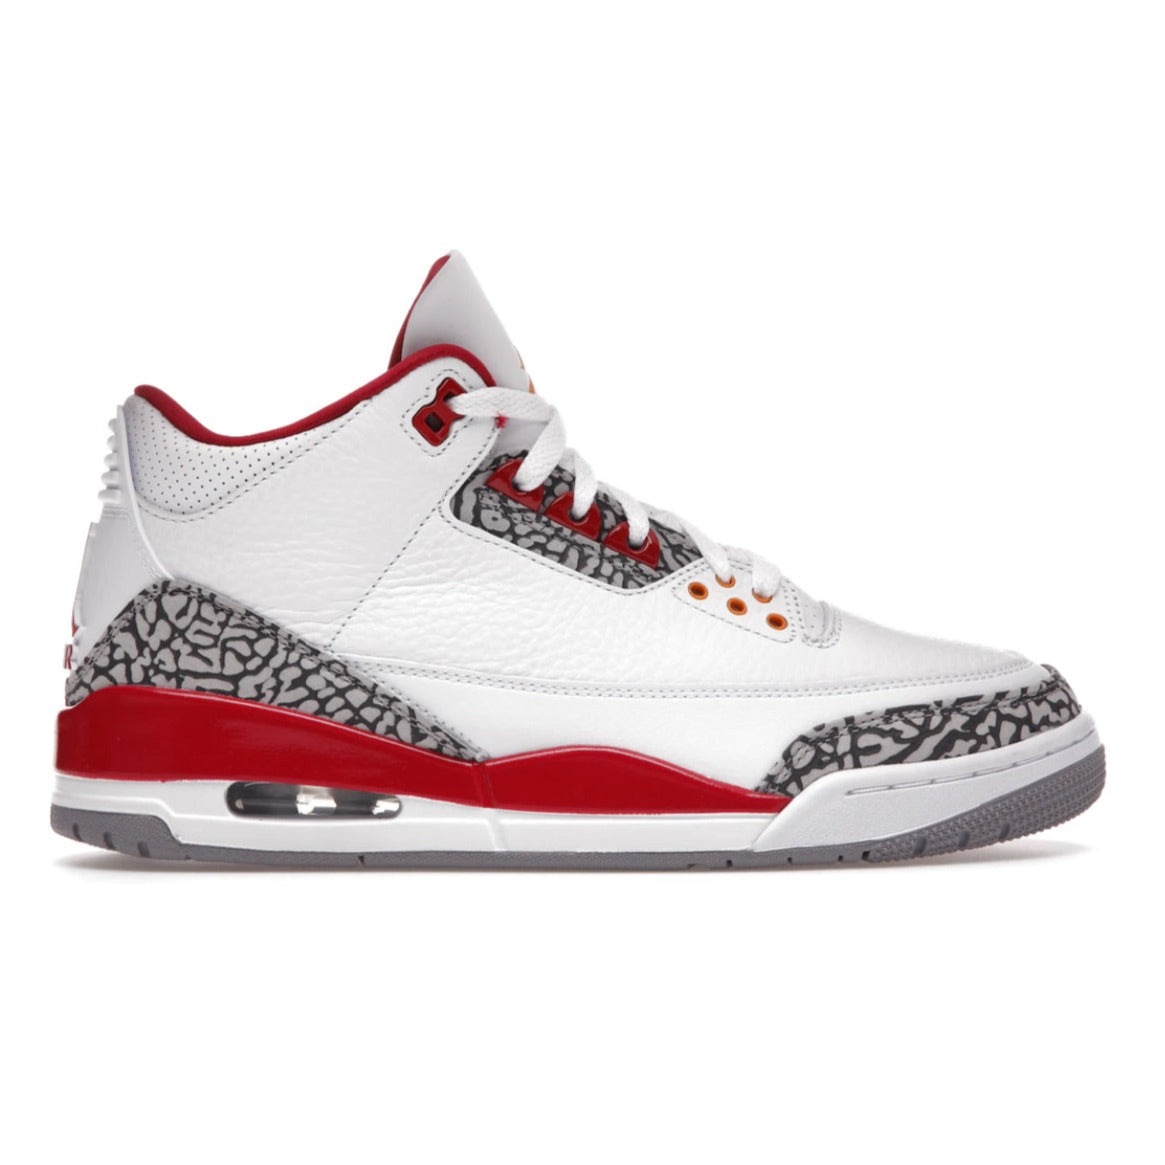 Jordan 3 Retro “Cardinal Red”